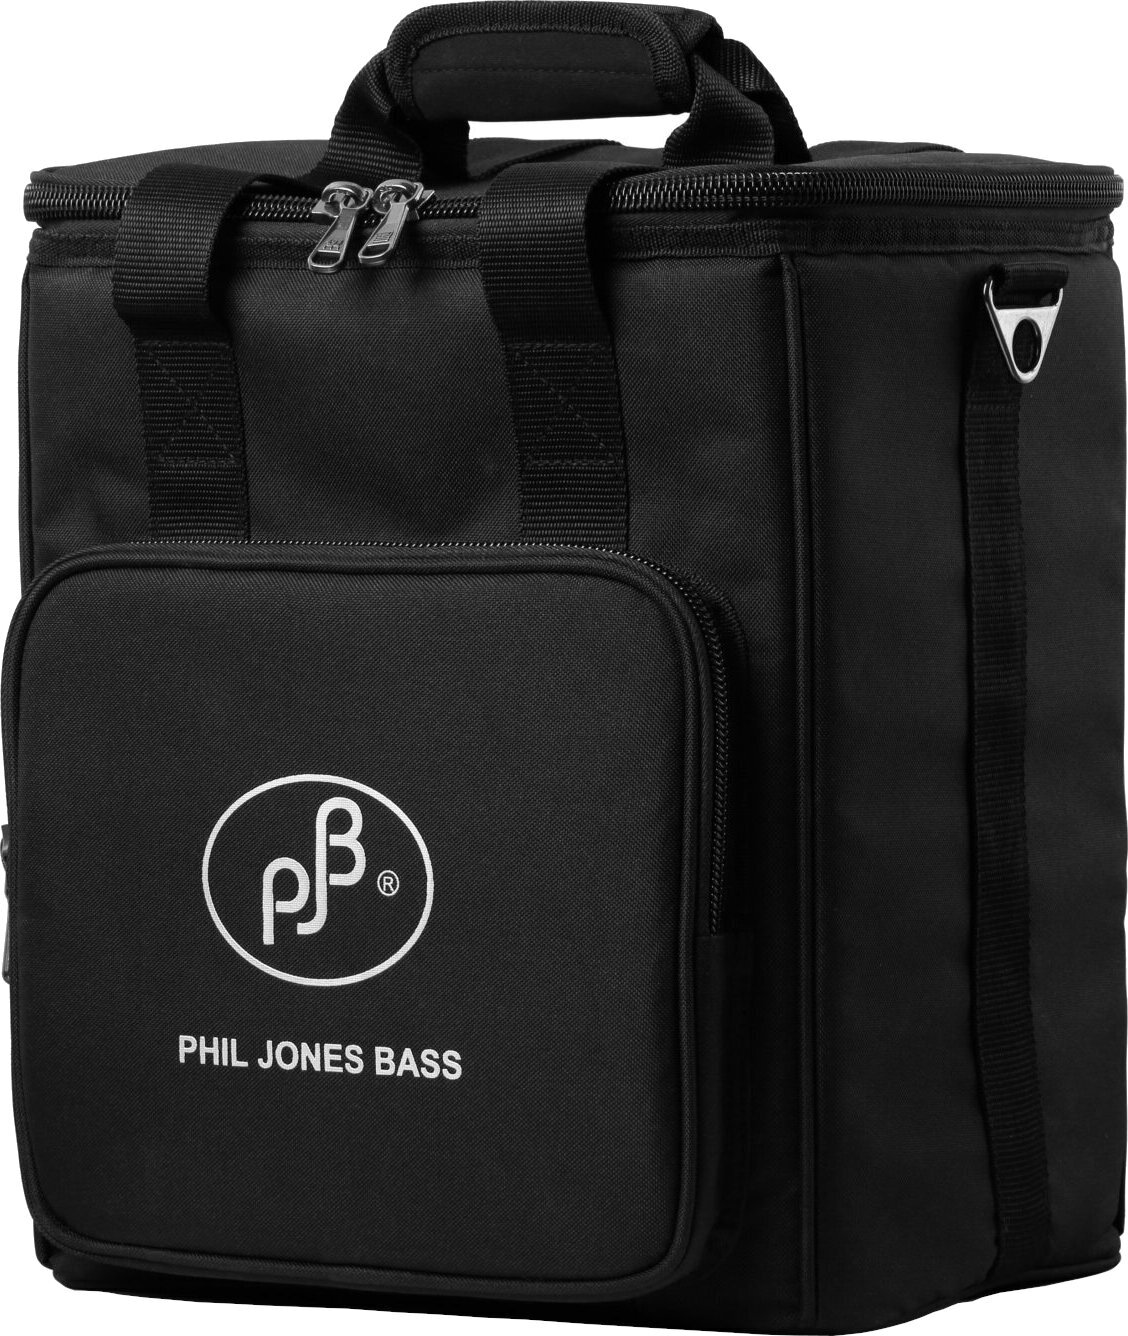 Schutzhülle für Bassverstärker Phil Jones Bass Carry Bag BG-120 Schutzhülle für Bassverstärker